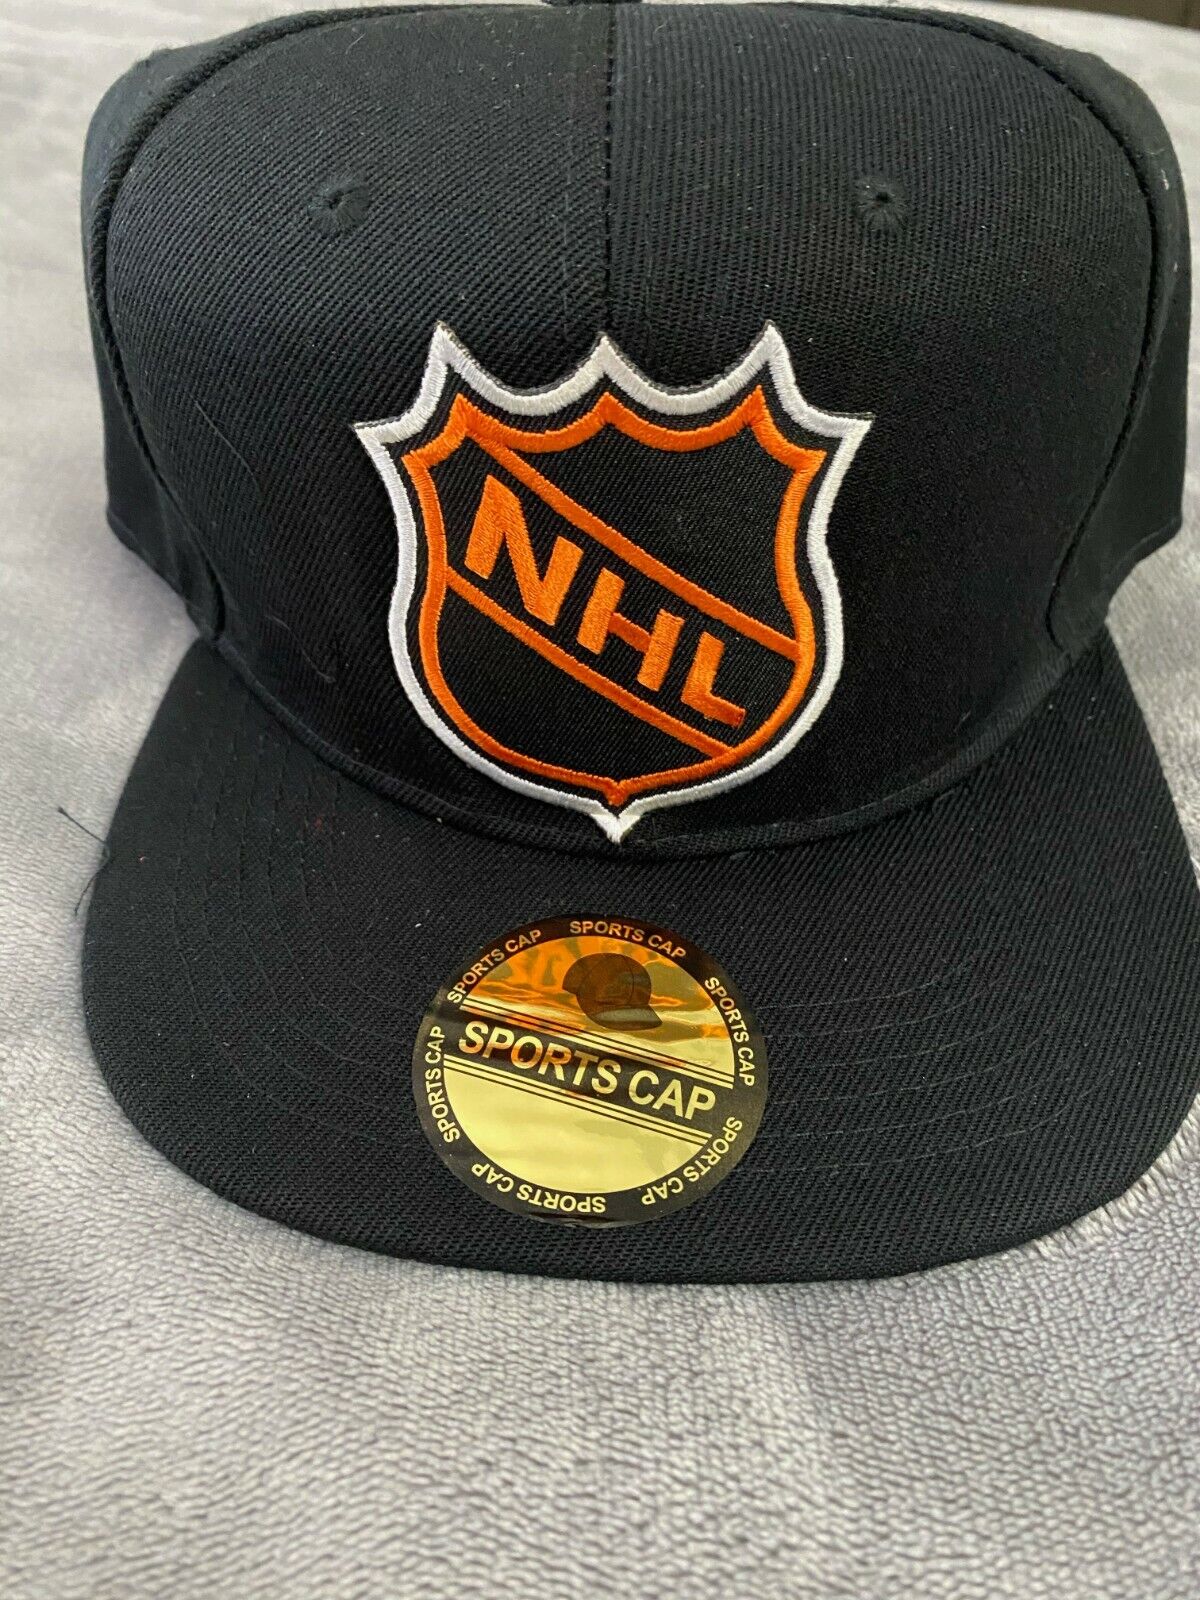 THROWBACK VINTAGE NHL NATIONAL HOCKEY LEAGUE ORANGE SHIELD LOGO HAT CAP NEW NWT